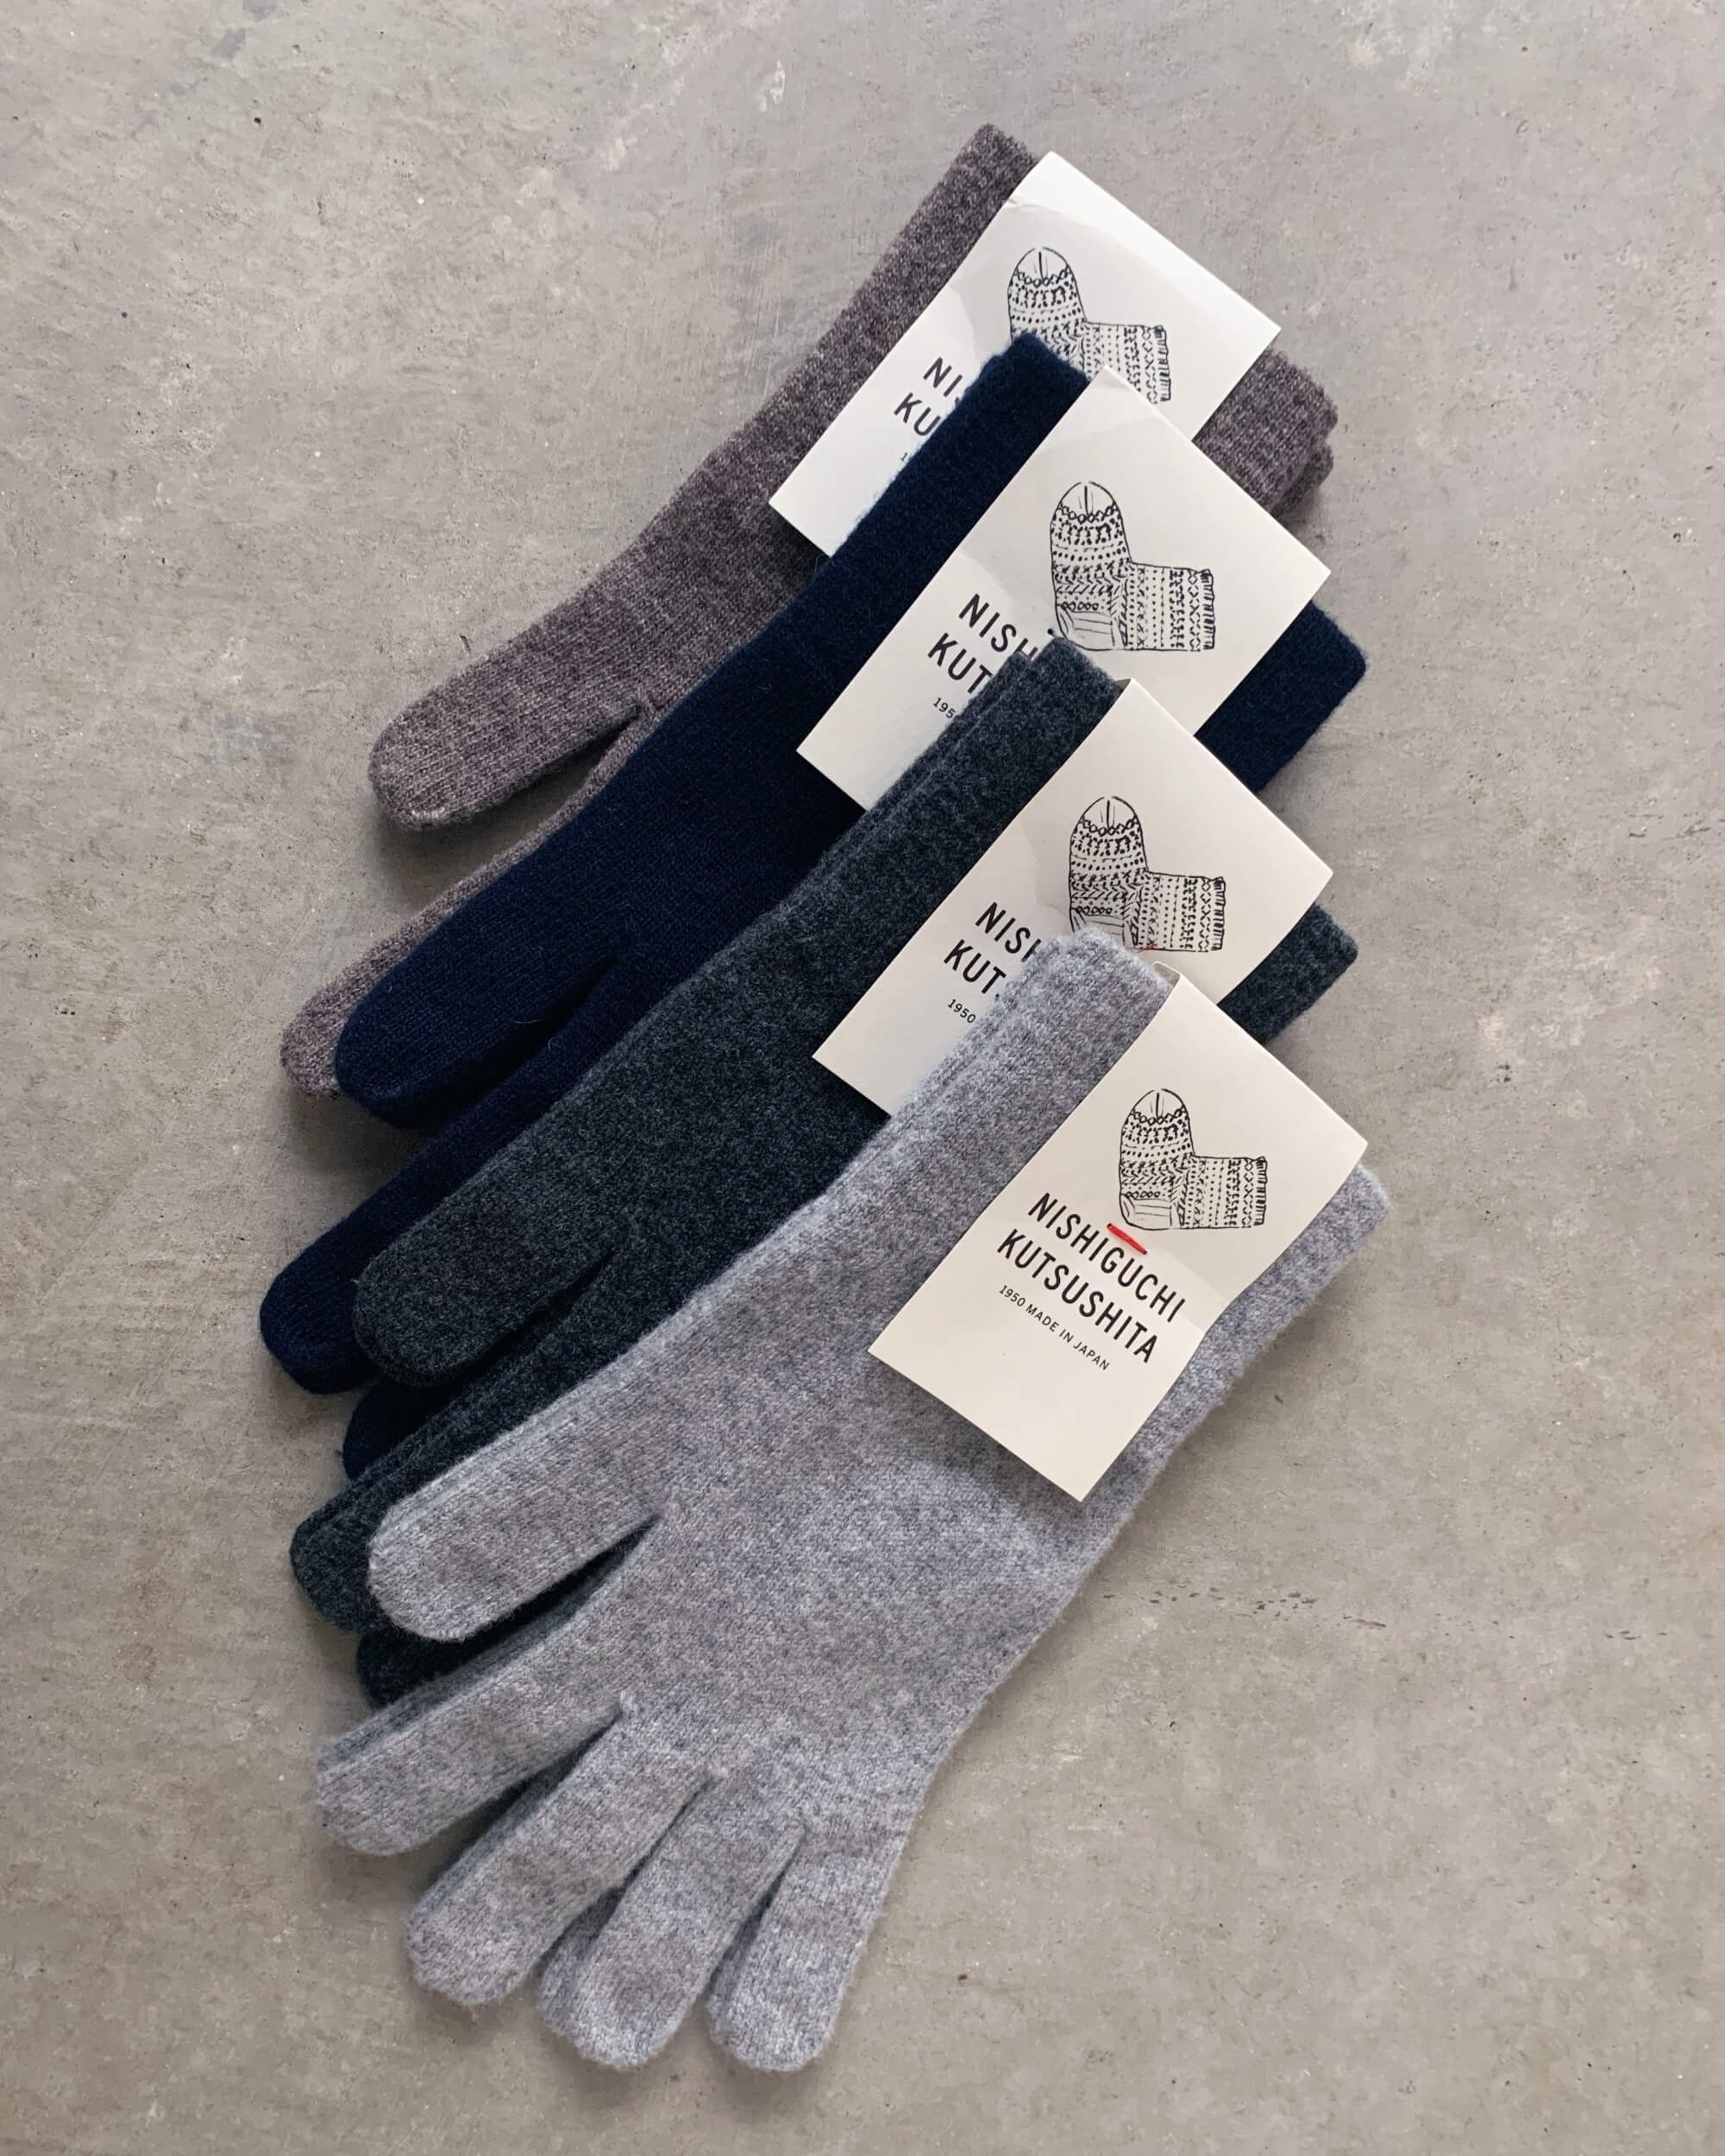 nishiguchi kutsushita : merino wool gloves